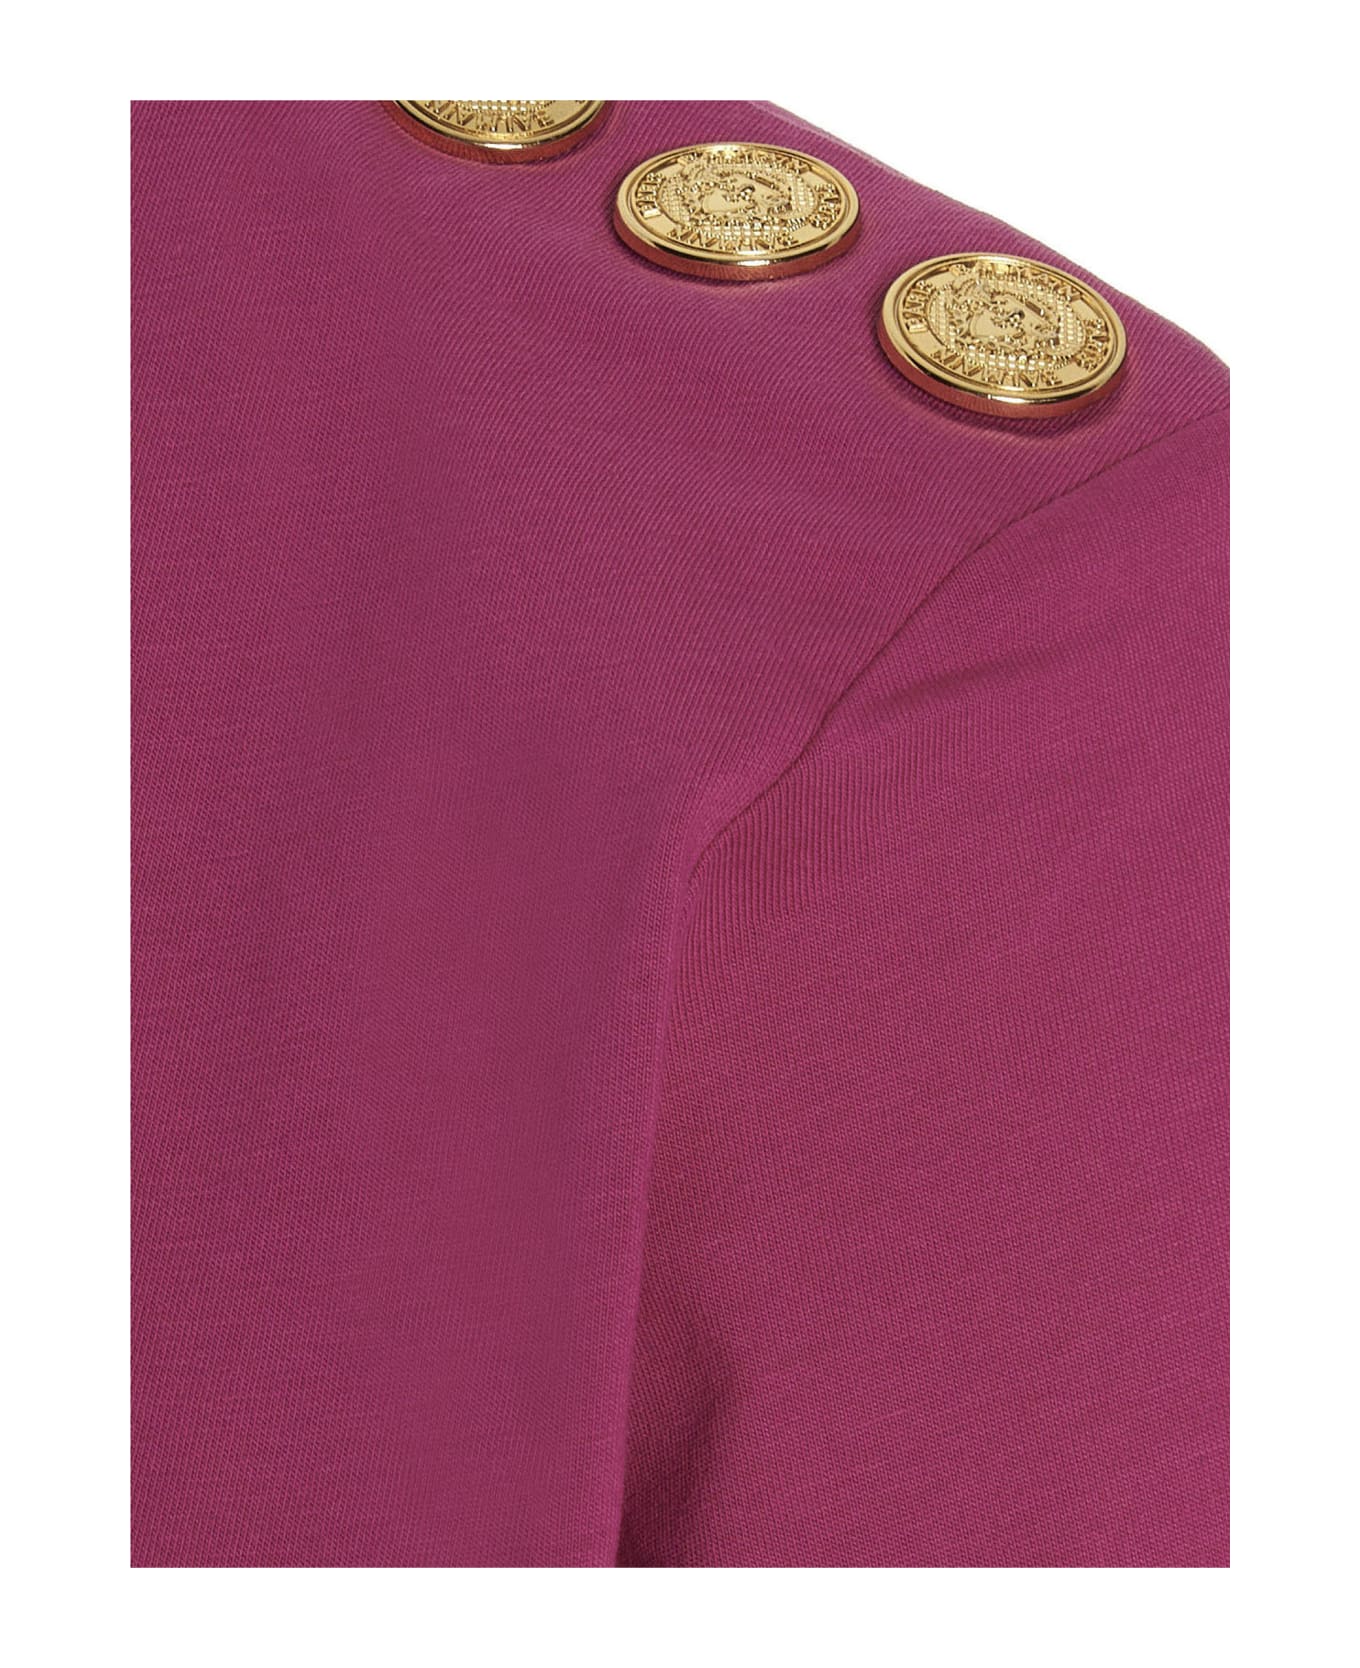 Balmain Gold Buttons T-shirt - Fucsia